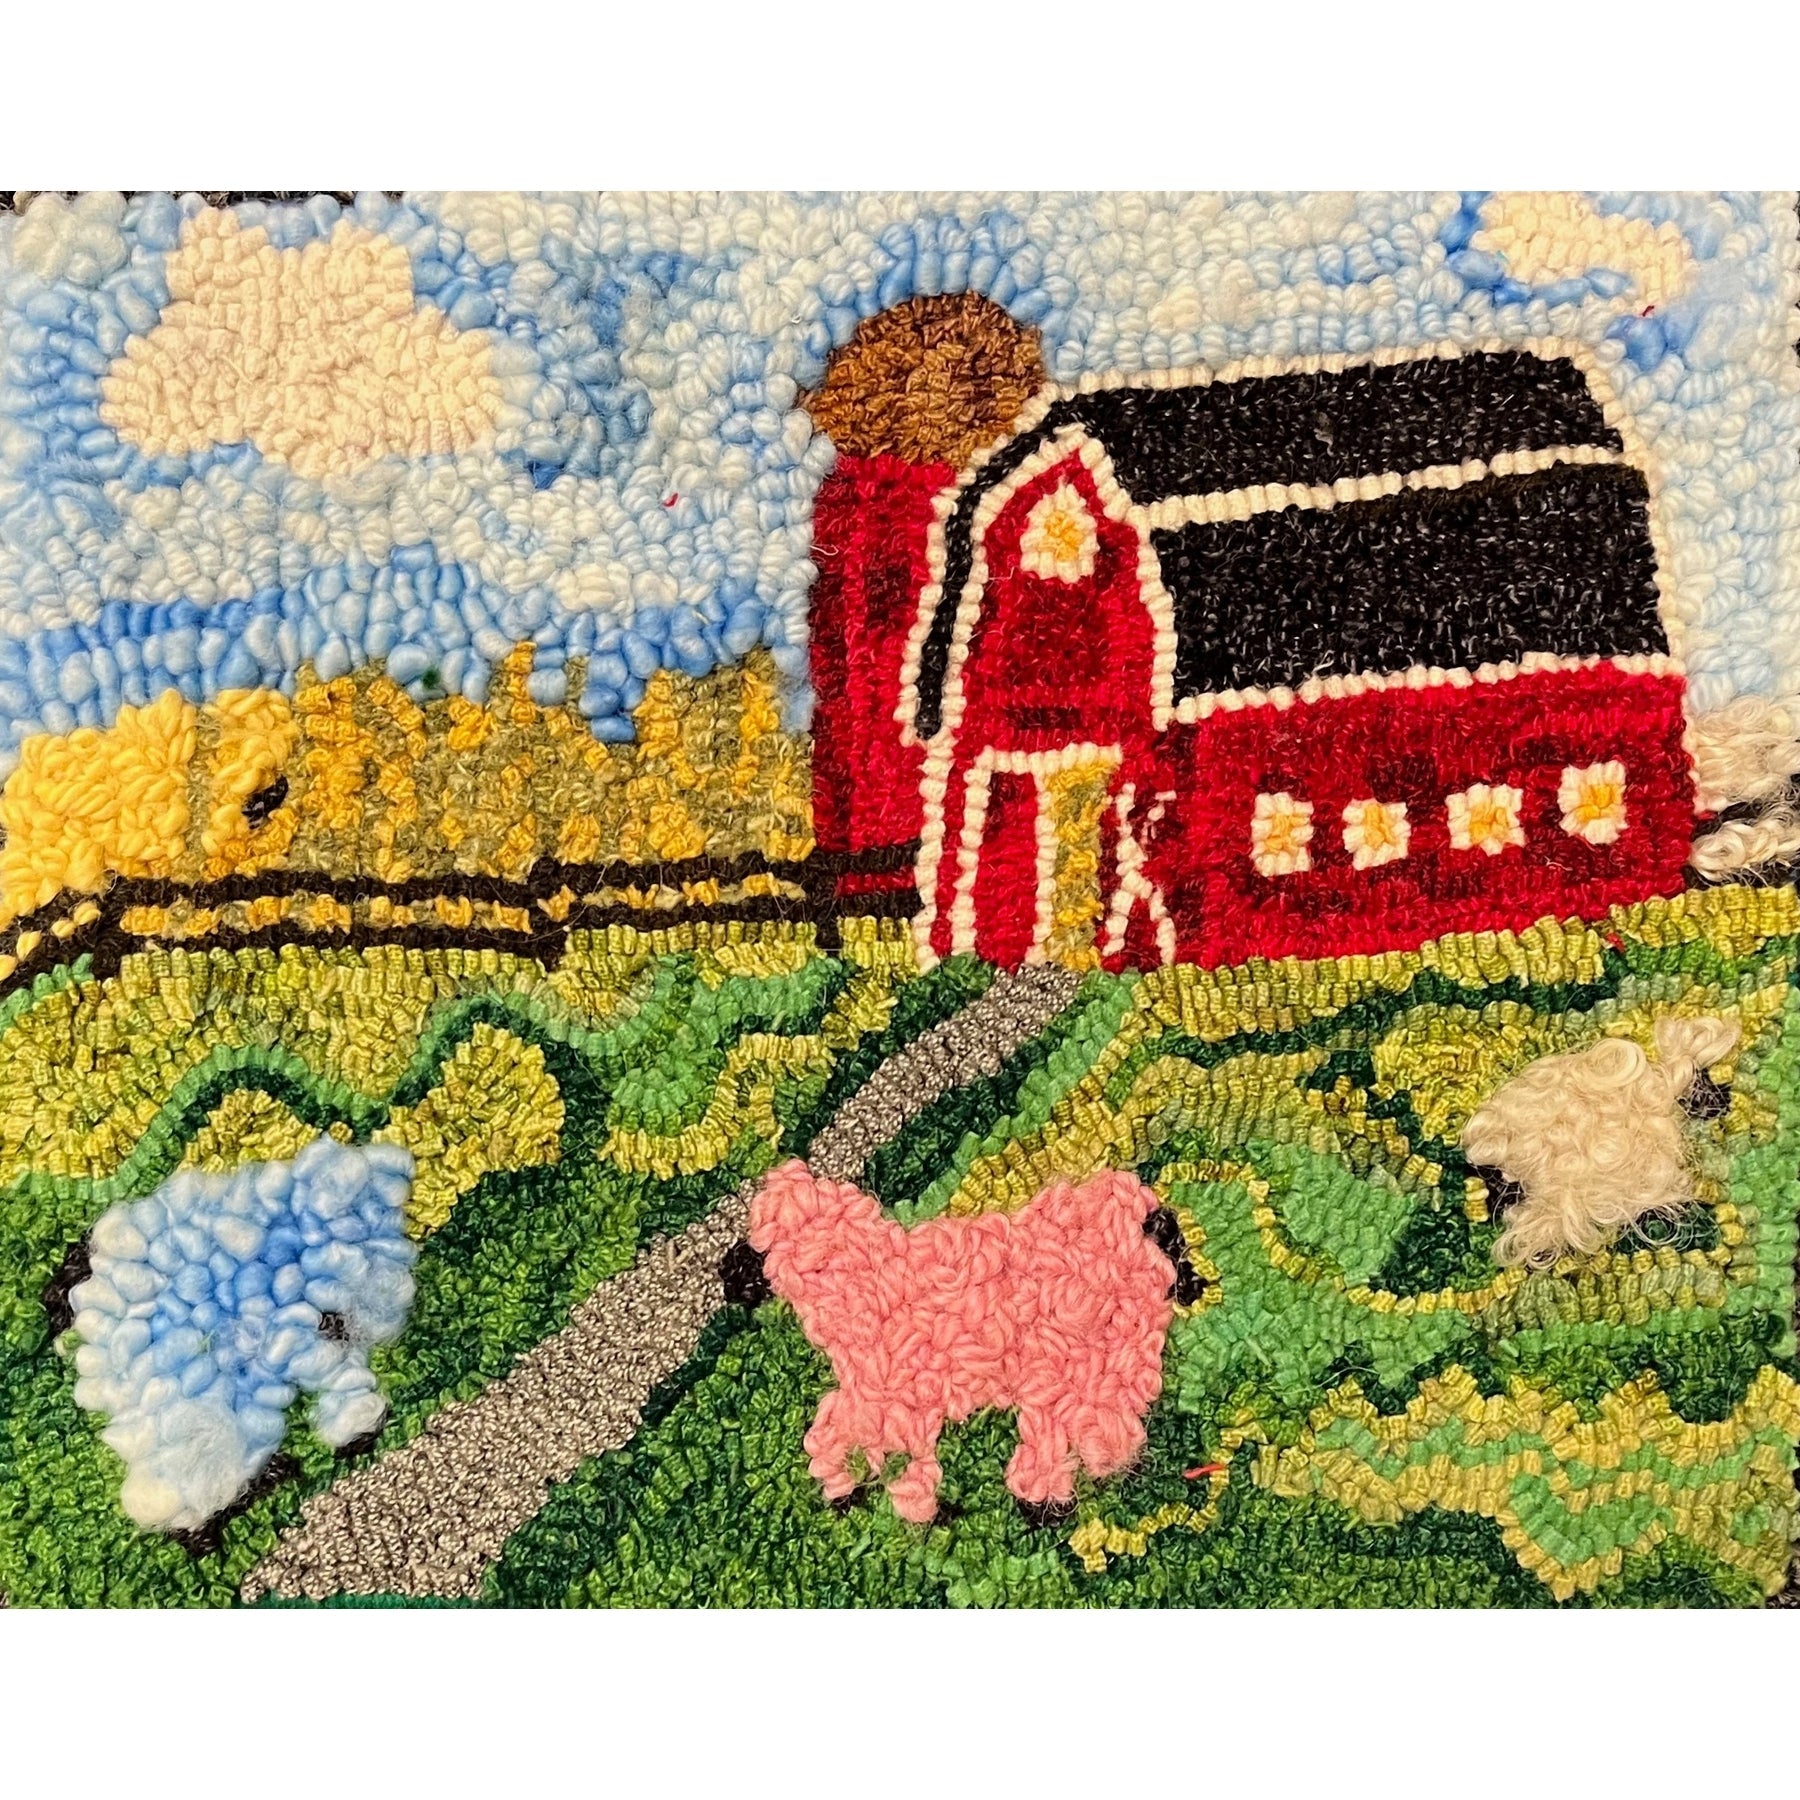 Bo Peep's Sheep, rug hooked by Liz Abel